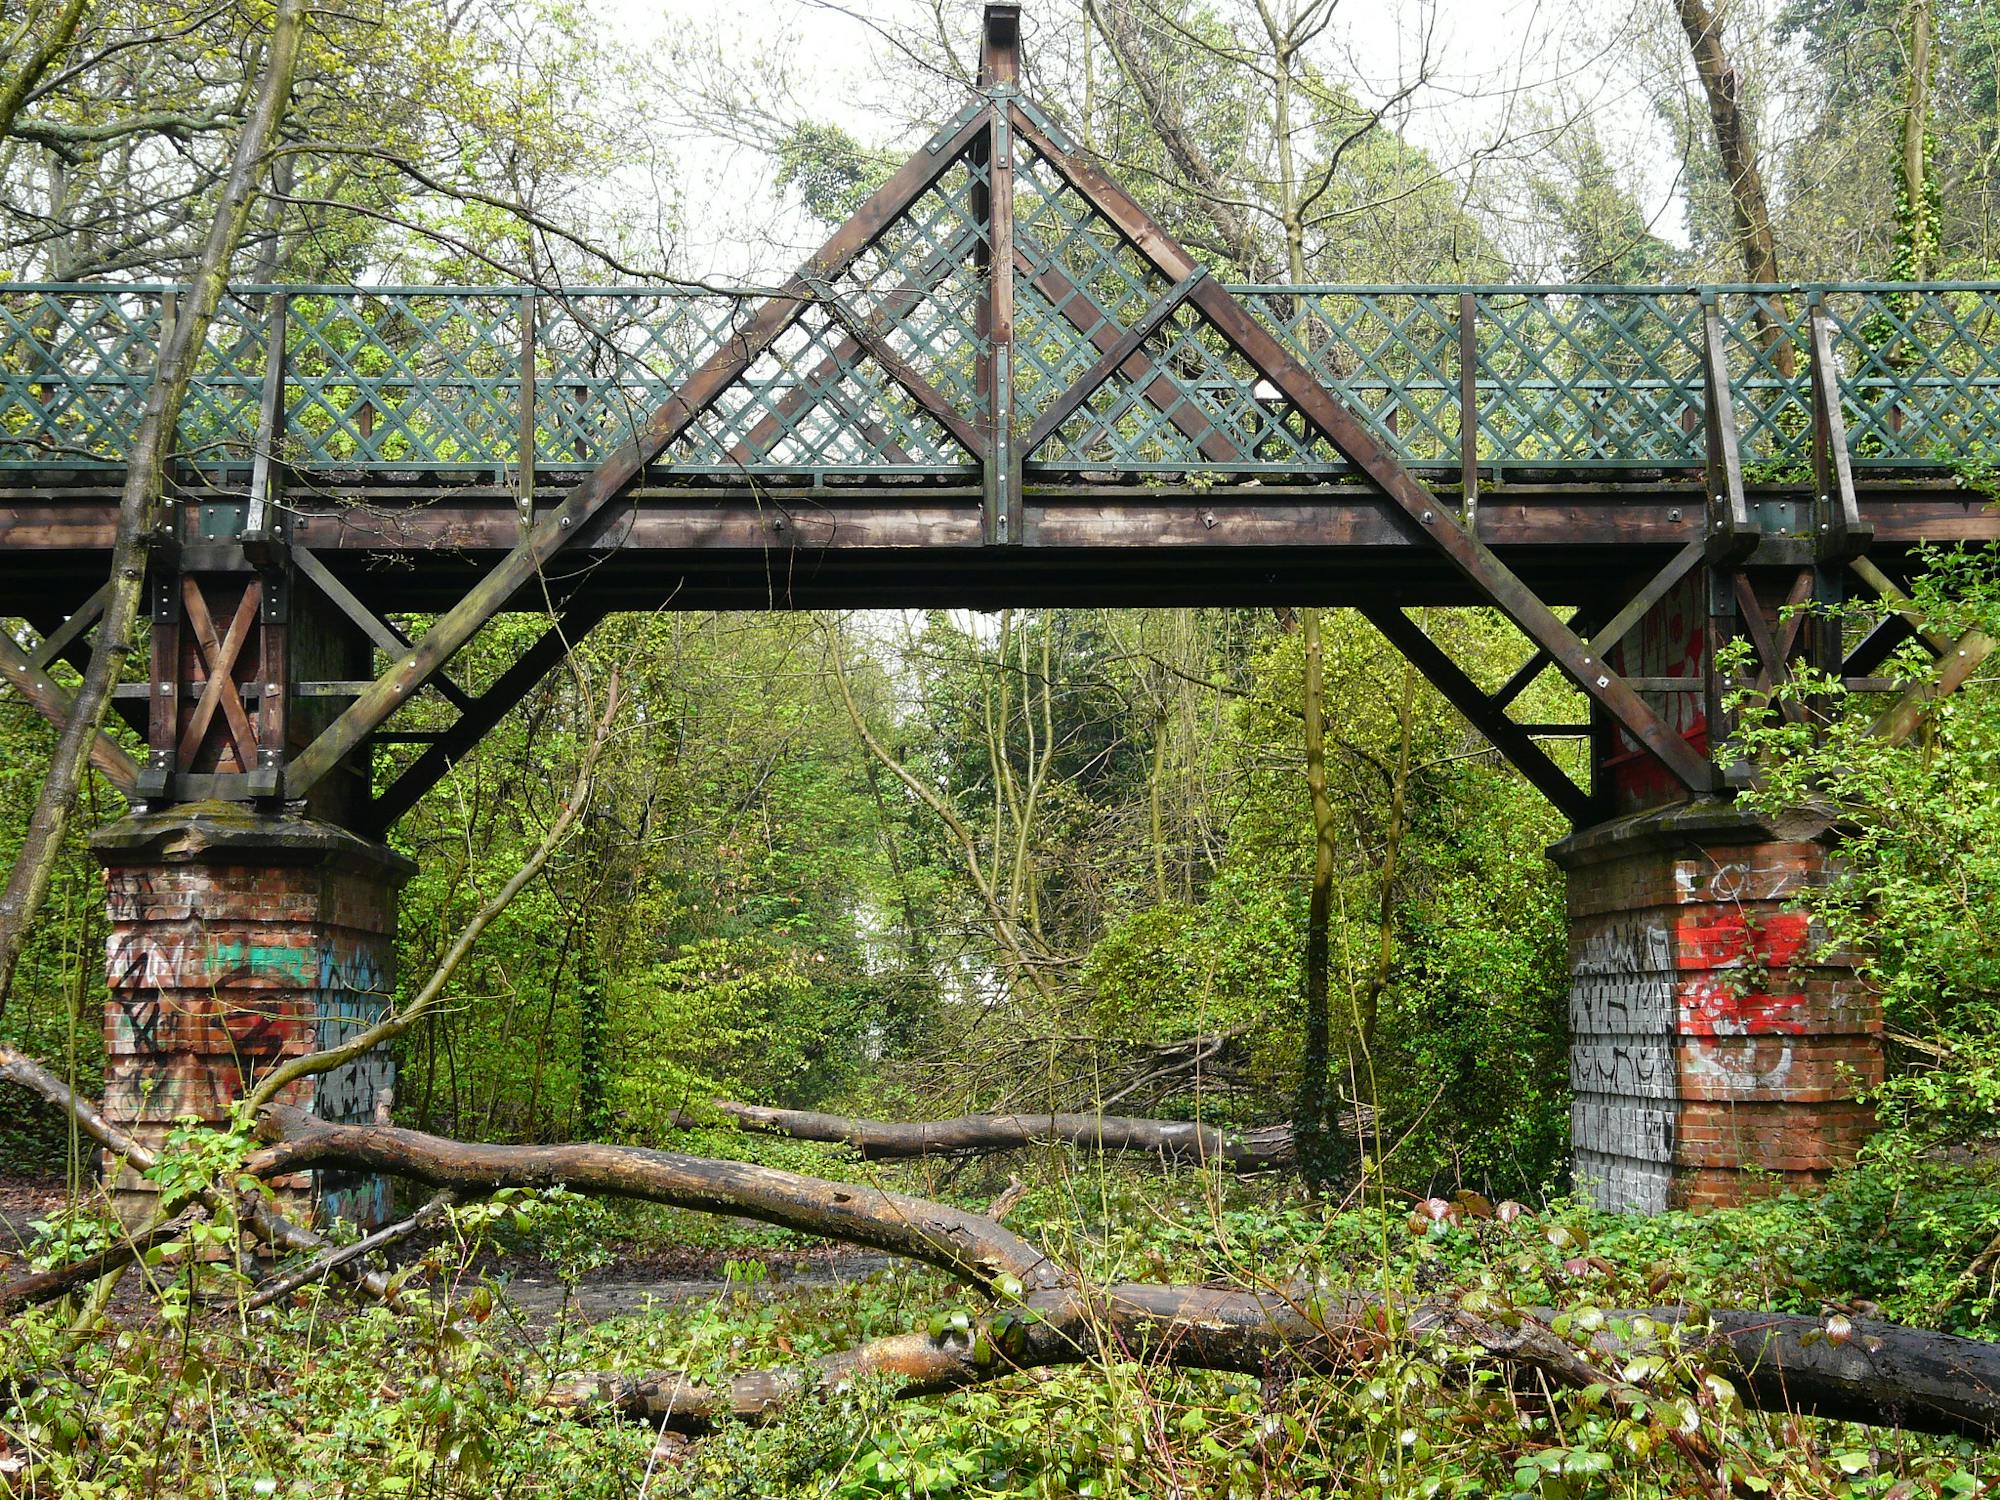 Dulwich Wood Rail Bridge over the Disused Railway Line